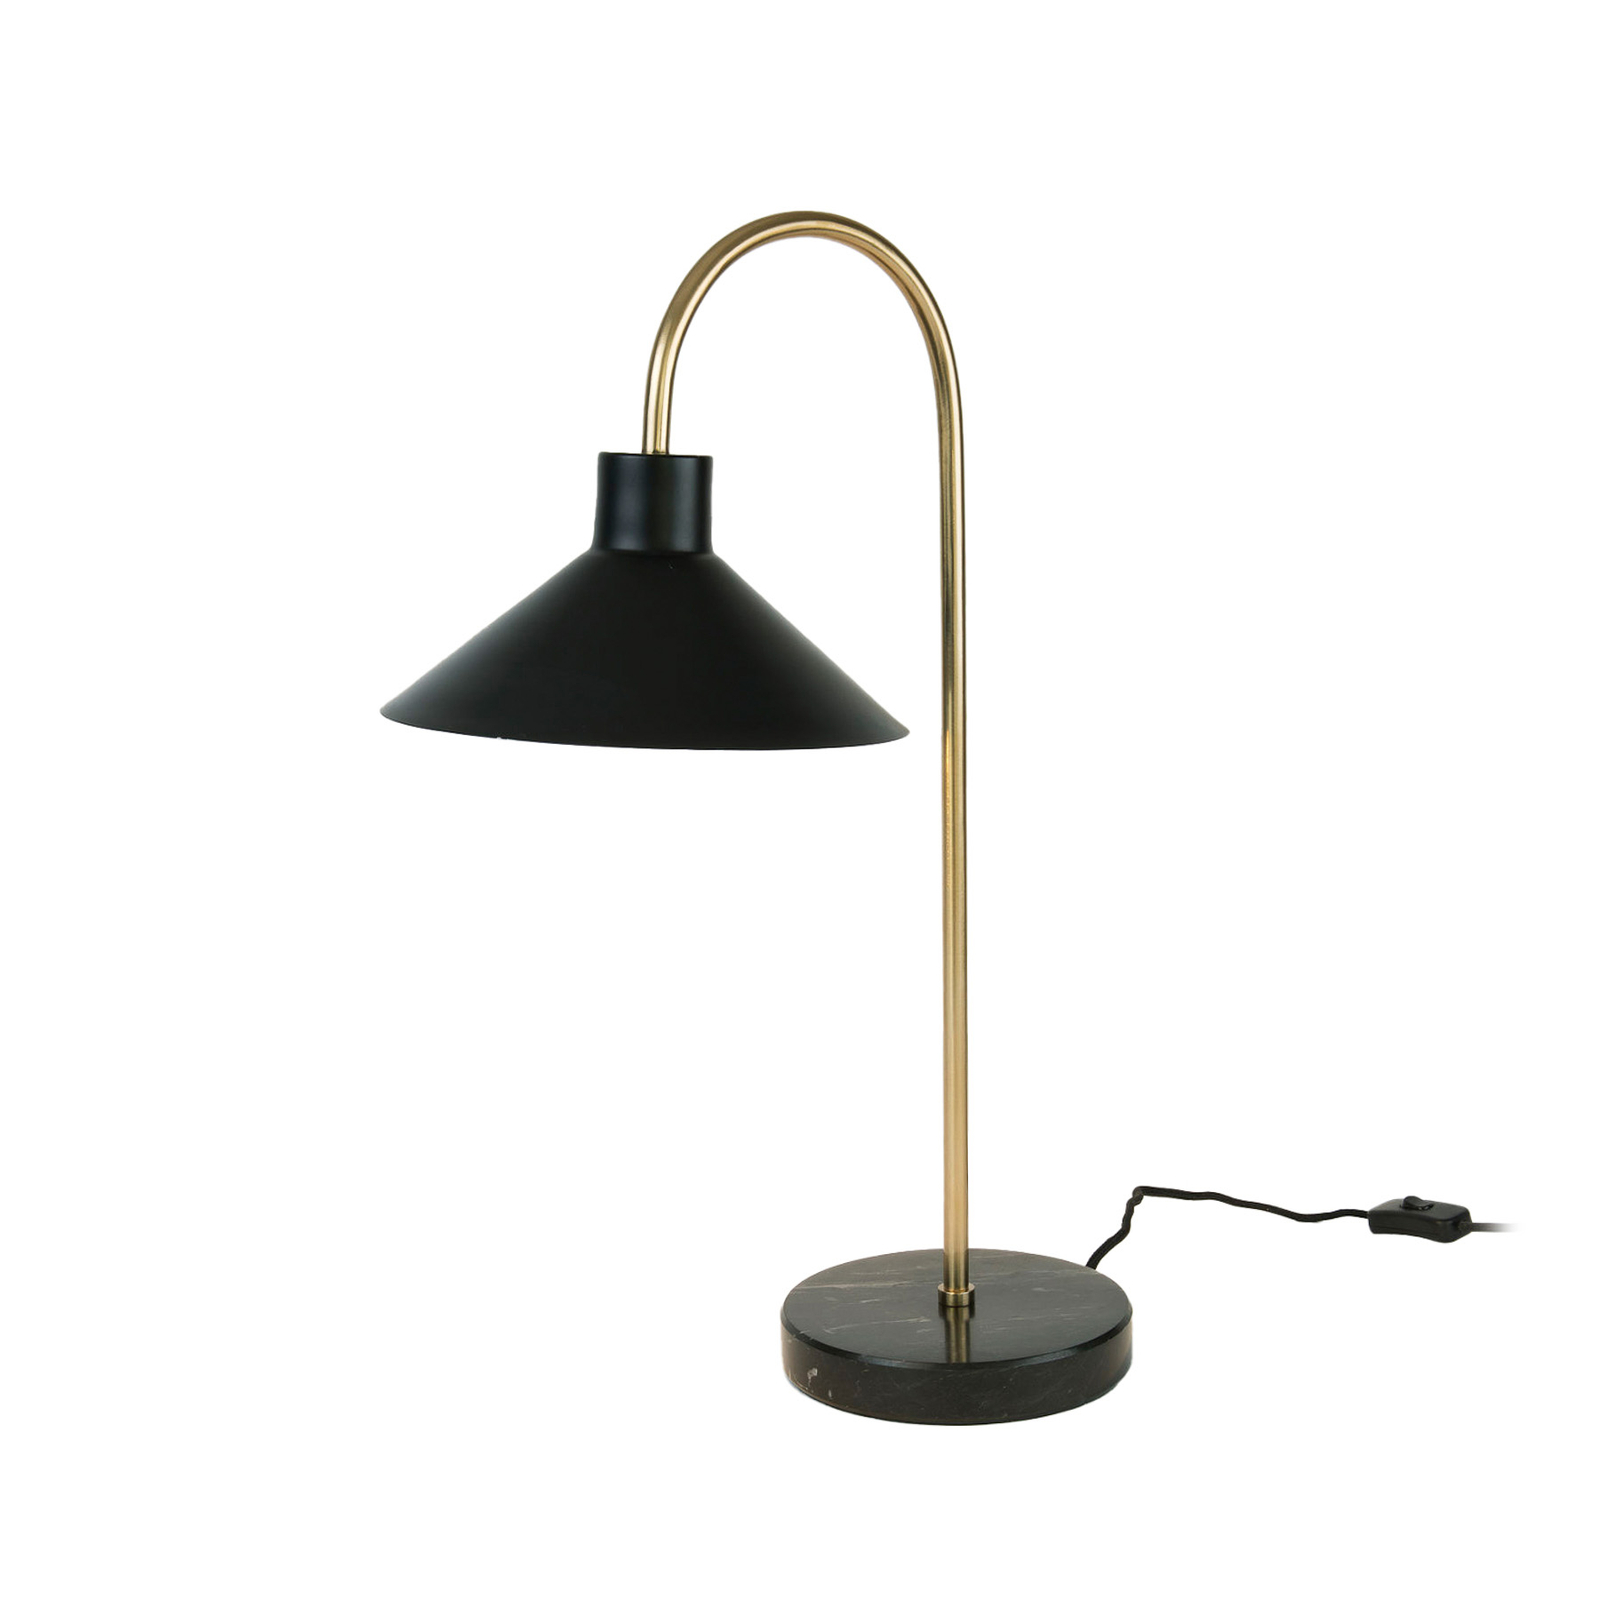 Oktavia bordlampe, sort/guld-farvet, højde 58 cm, marmor